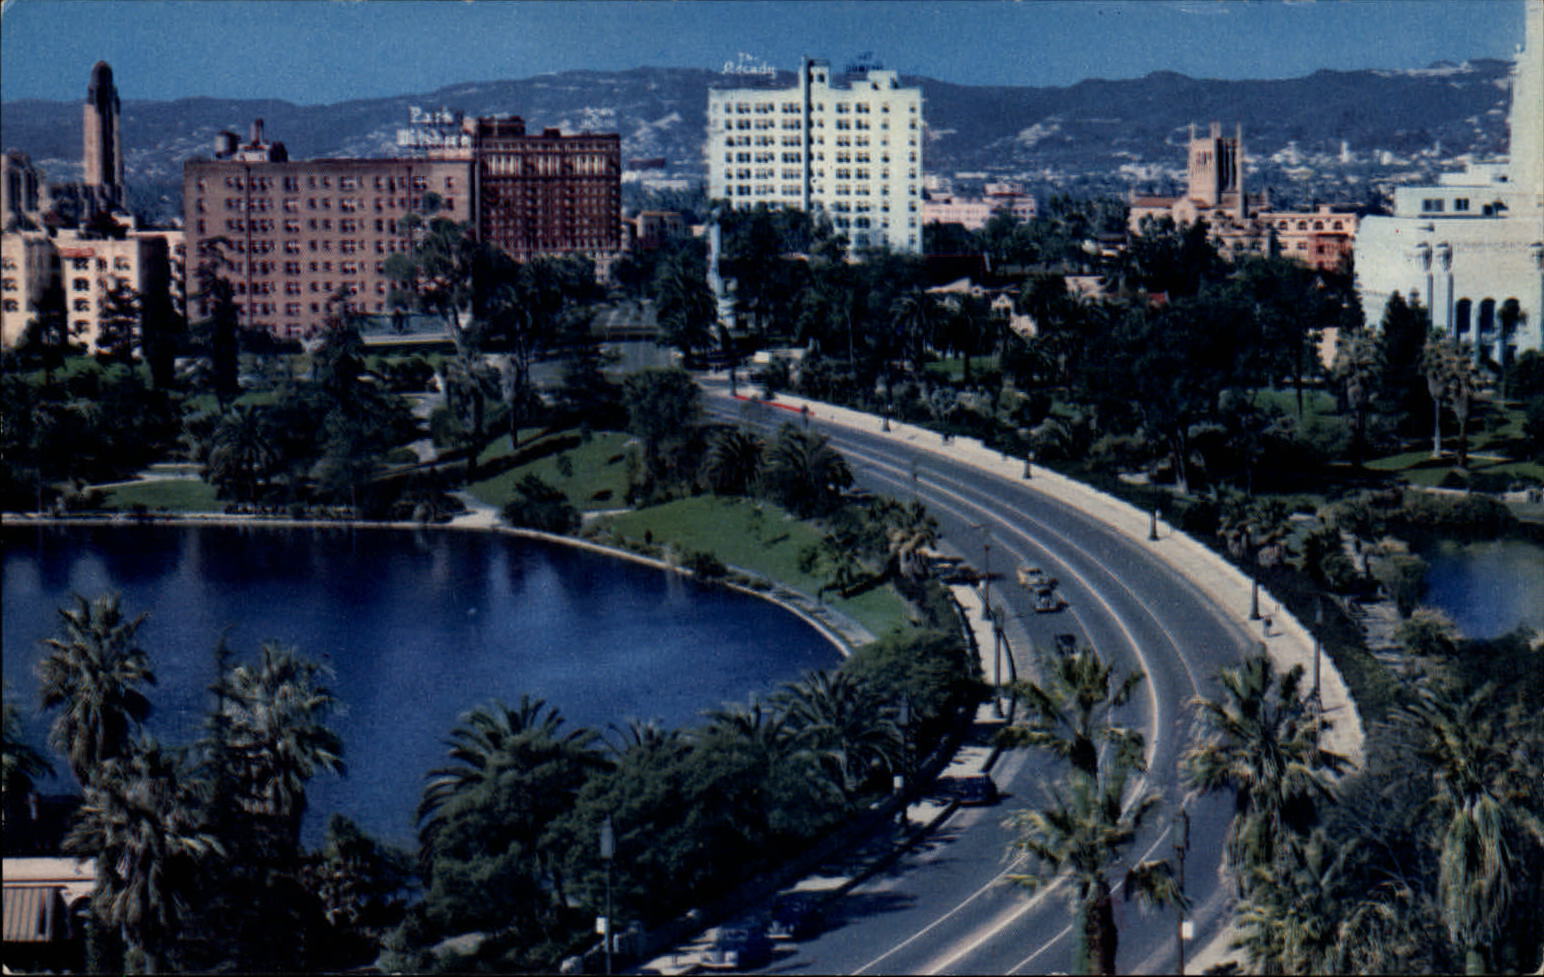 MacArthur Park Los Angeles California aerial view ~ 1950s-60s vintage postcard